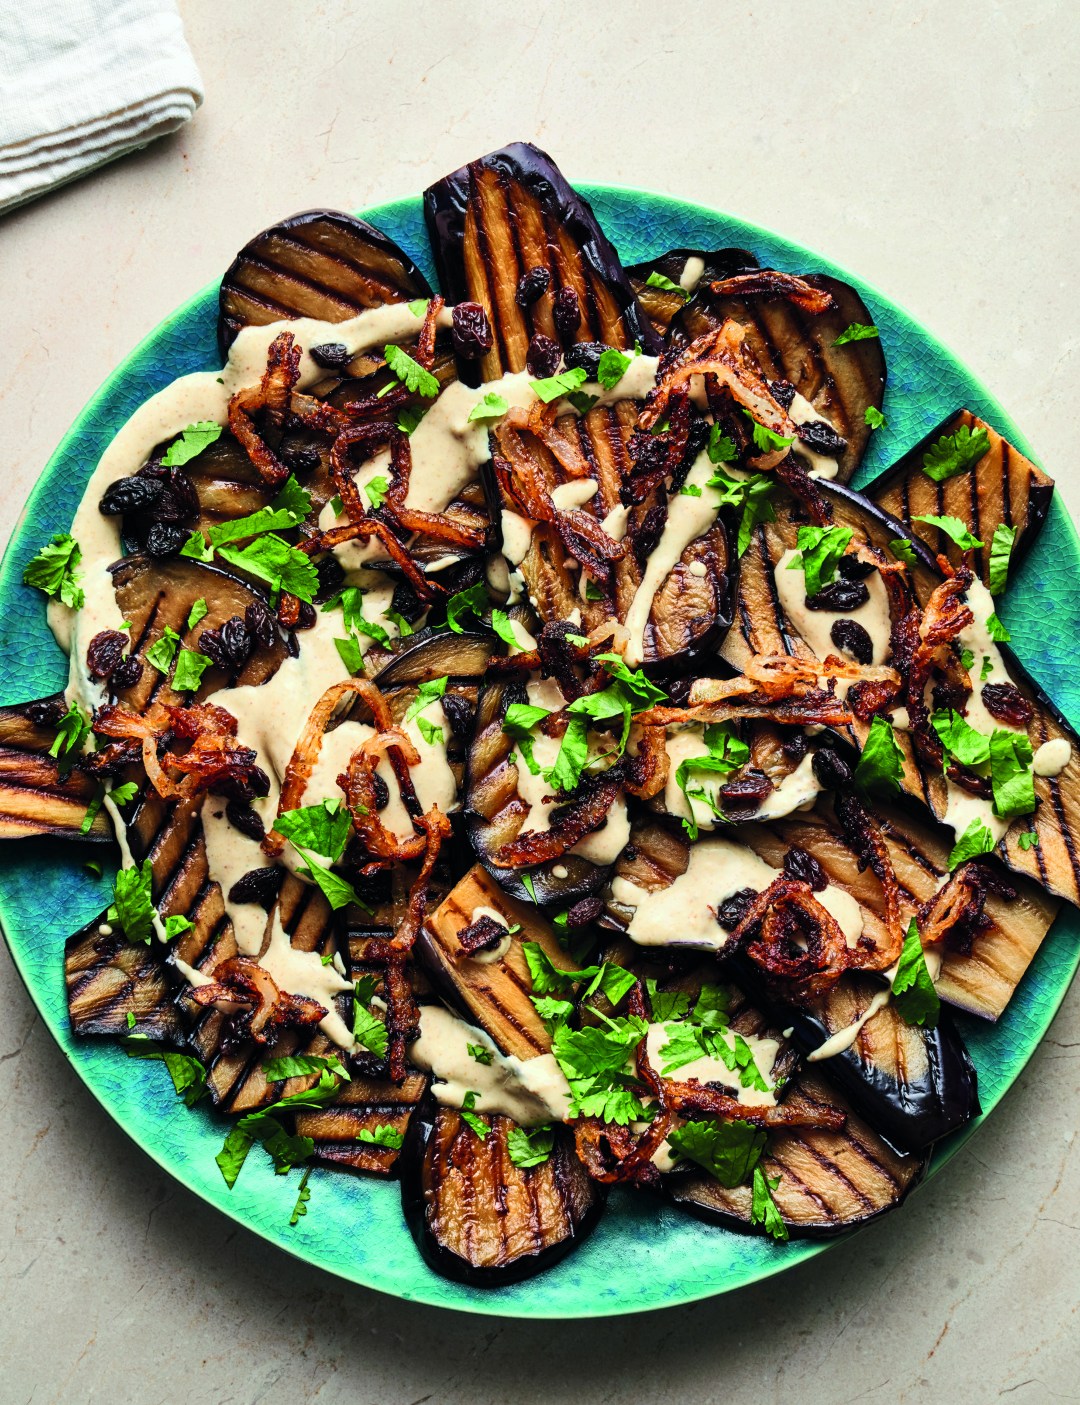 Recipes: Enjoy Nadiya Hussain's coronation aubergine for a veggie twist on a classic